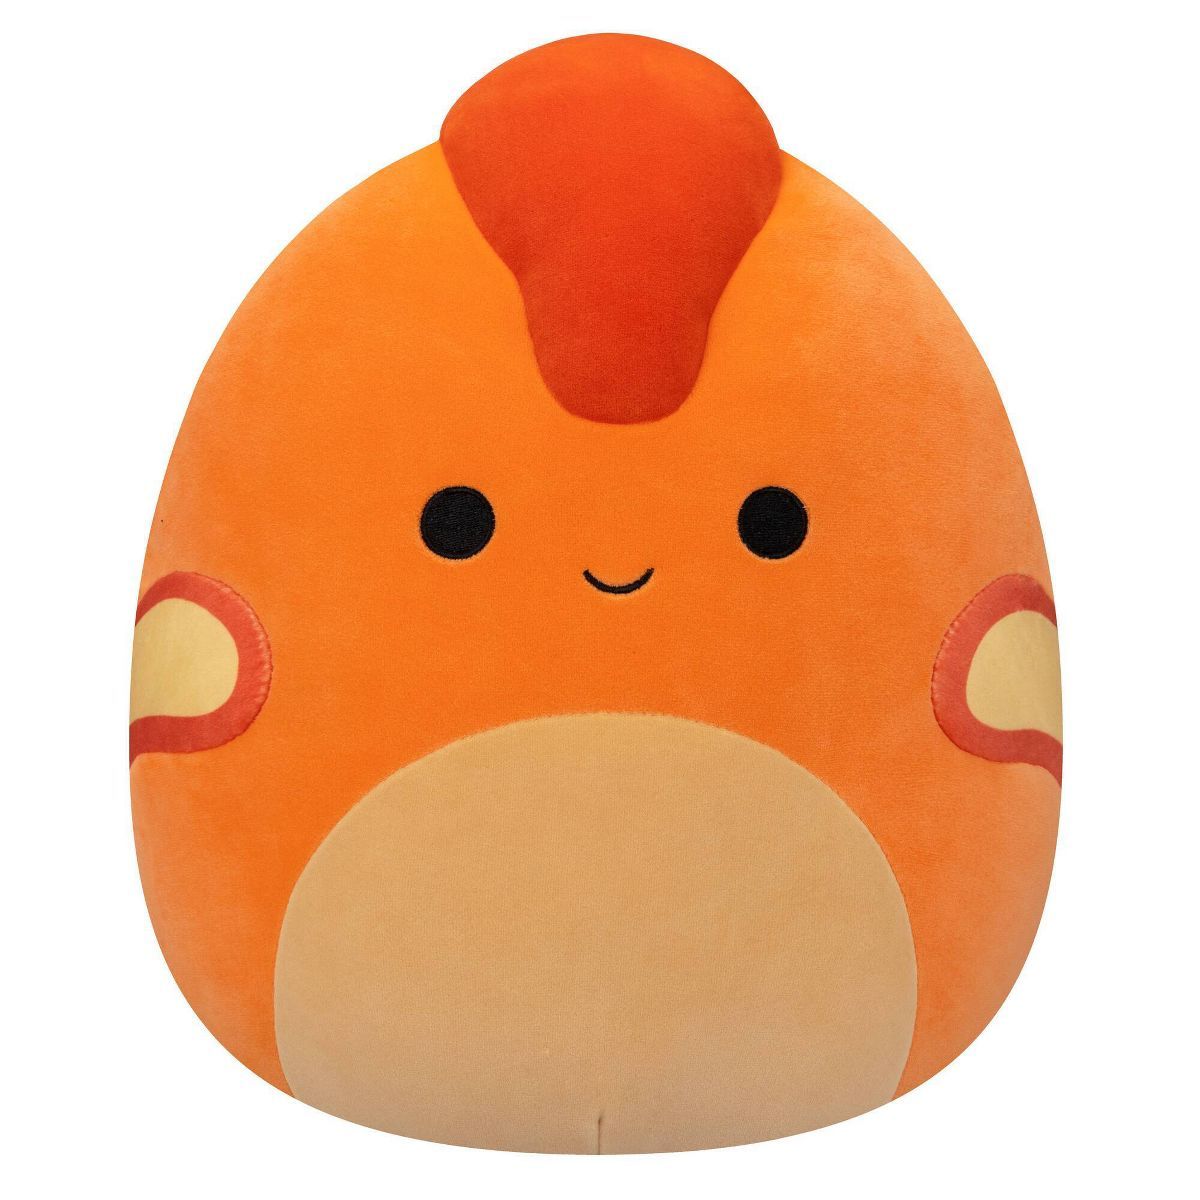 Squishmallows 11" Nichelle the Orange Dinosaur with Fuzzy Head Plush Toy | Target